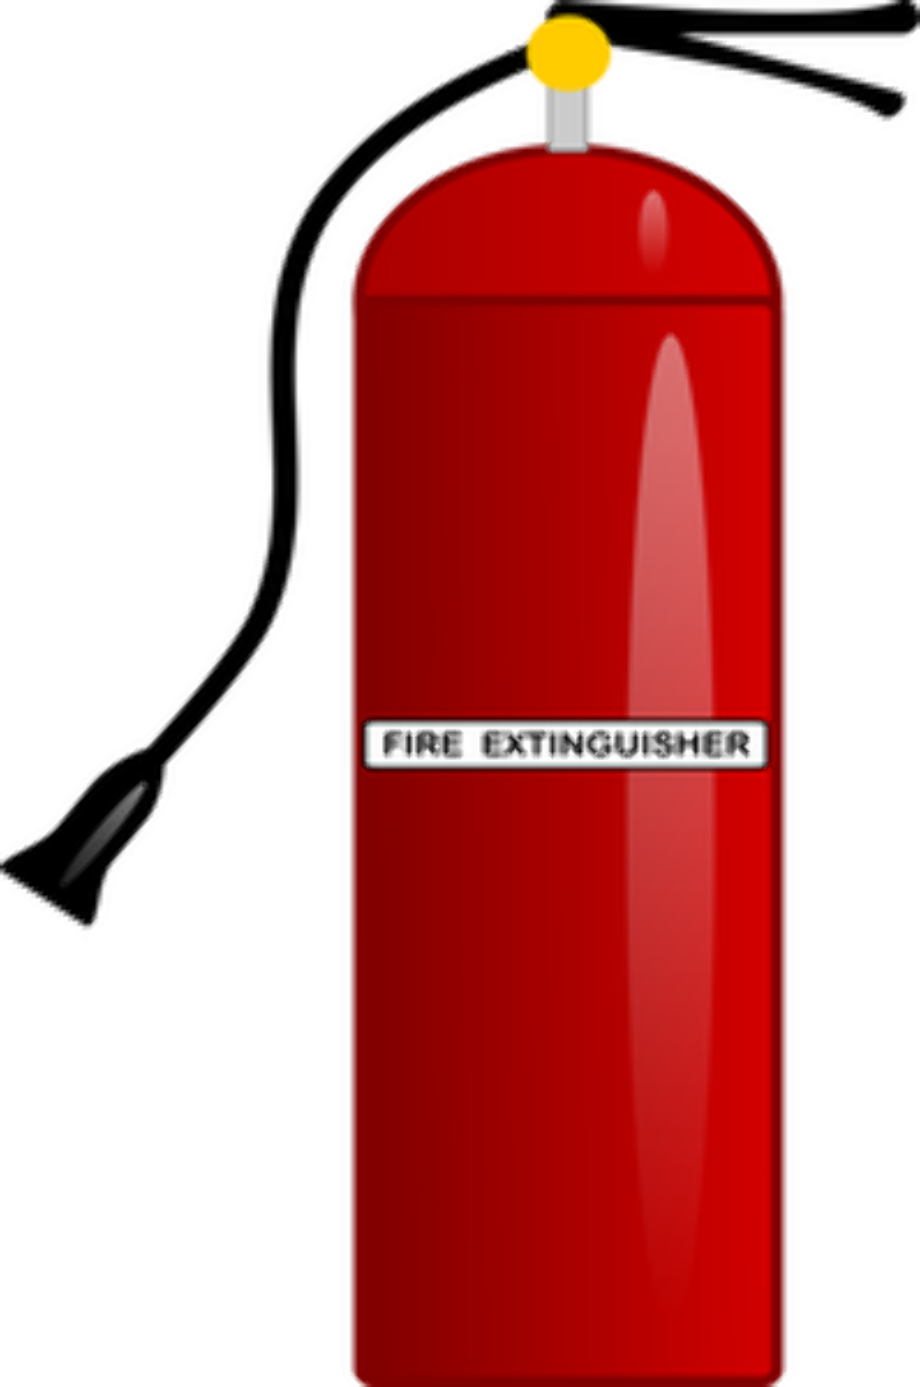 fireman clipart fire extinguisher